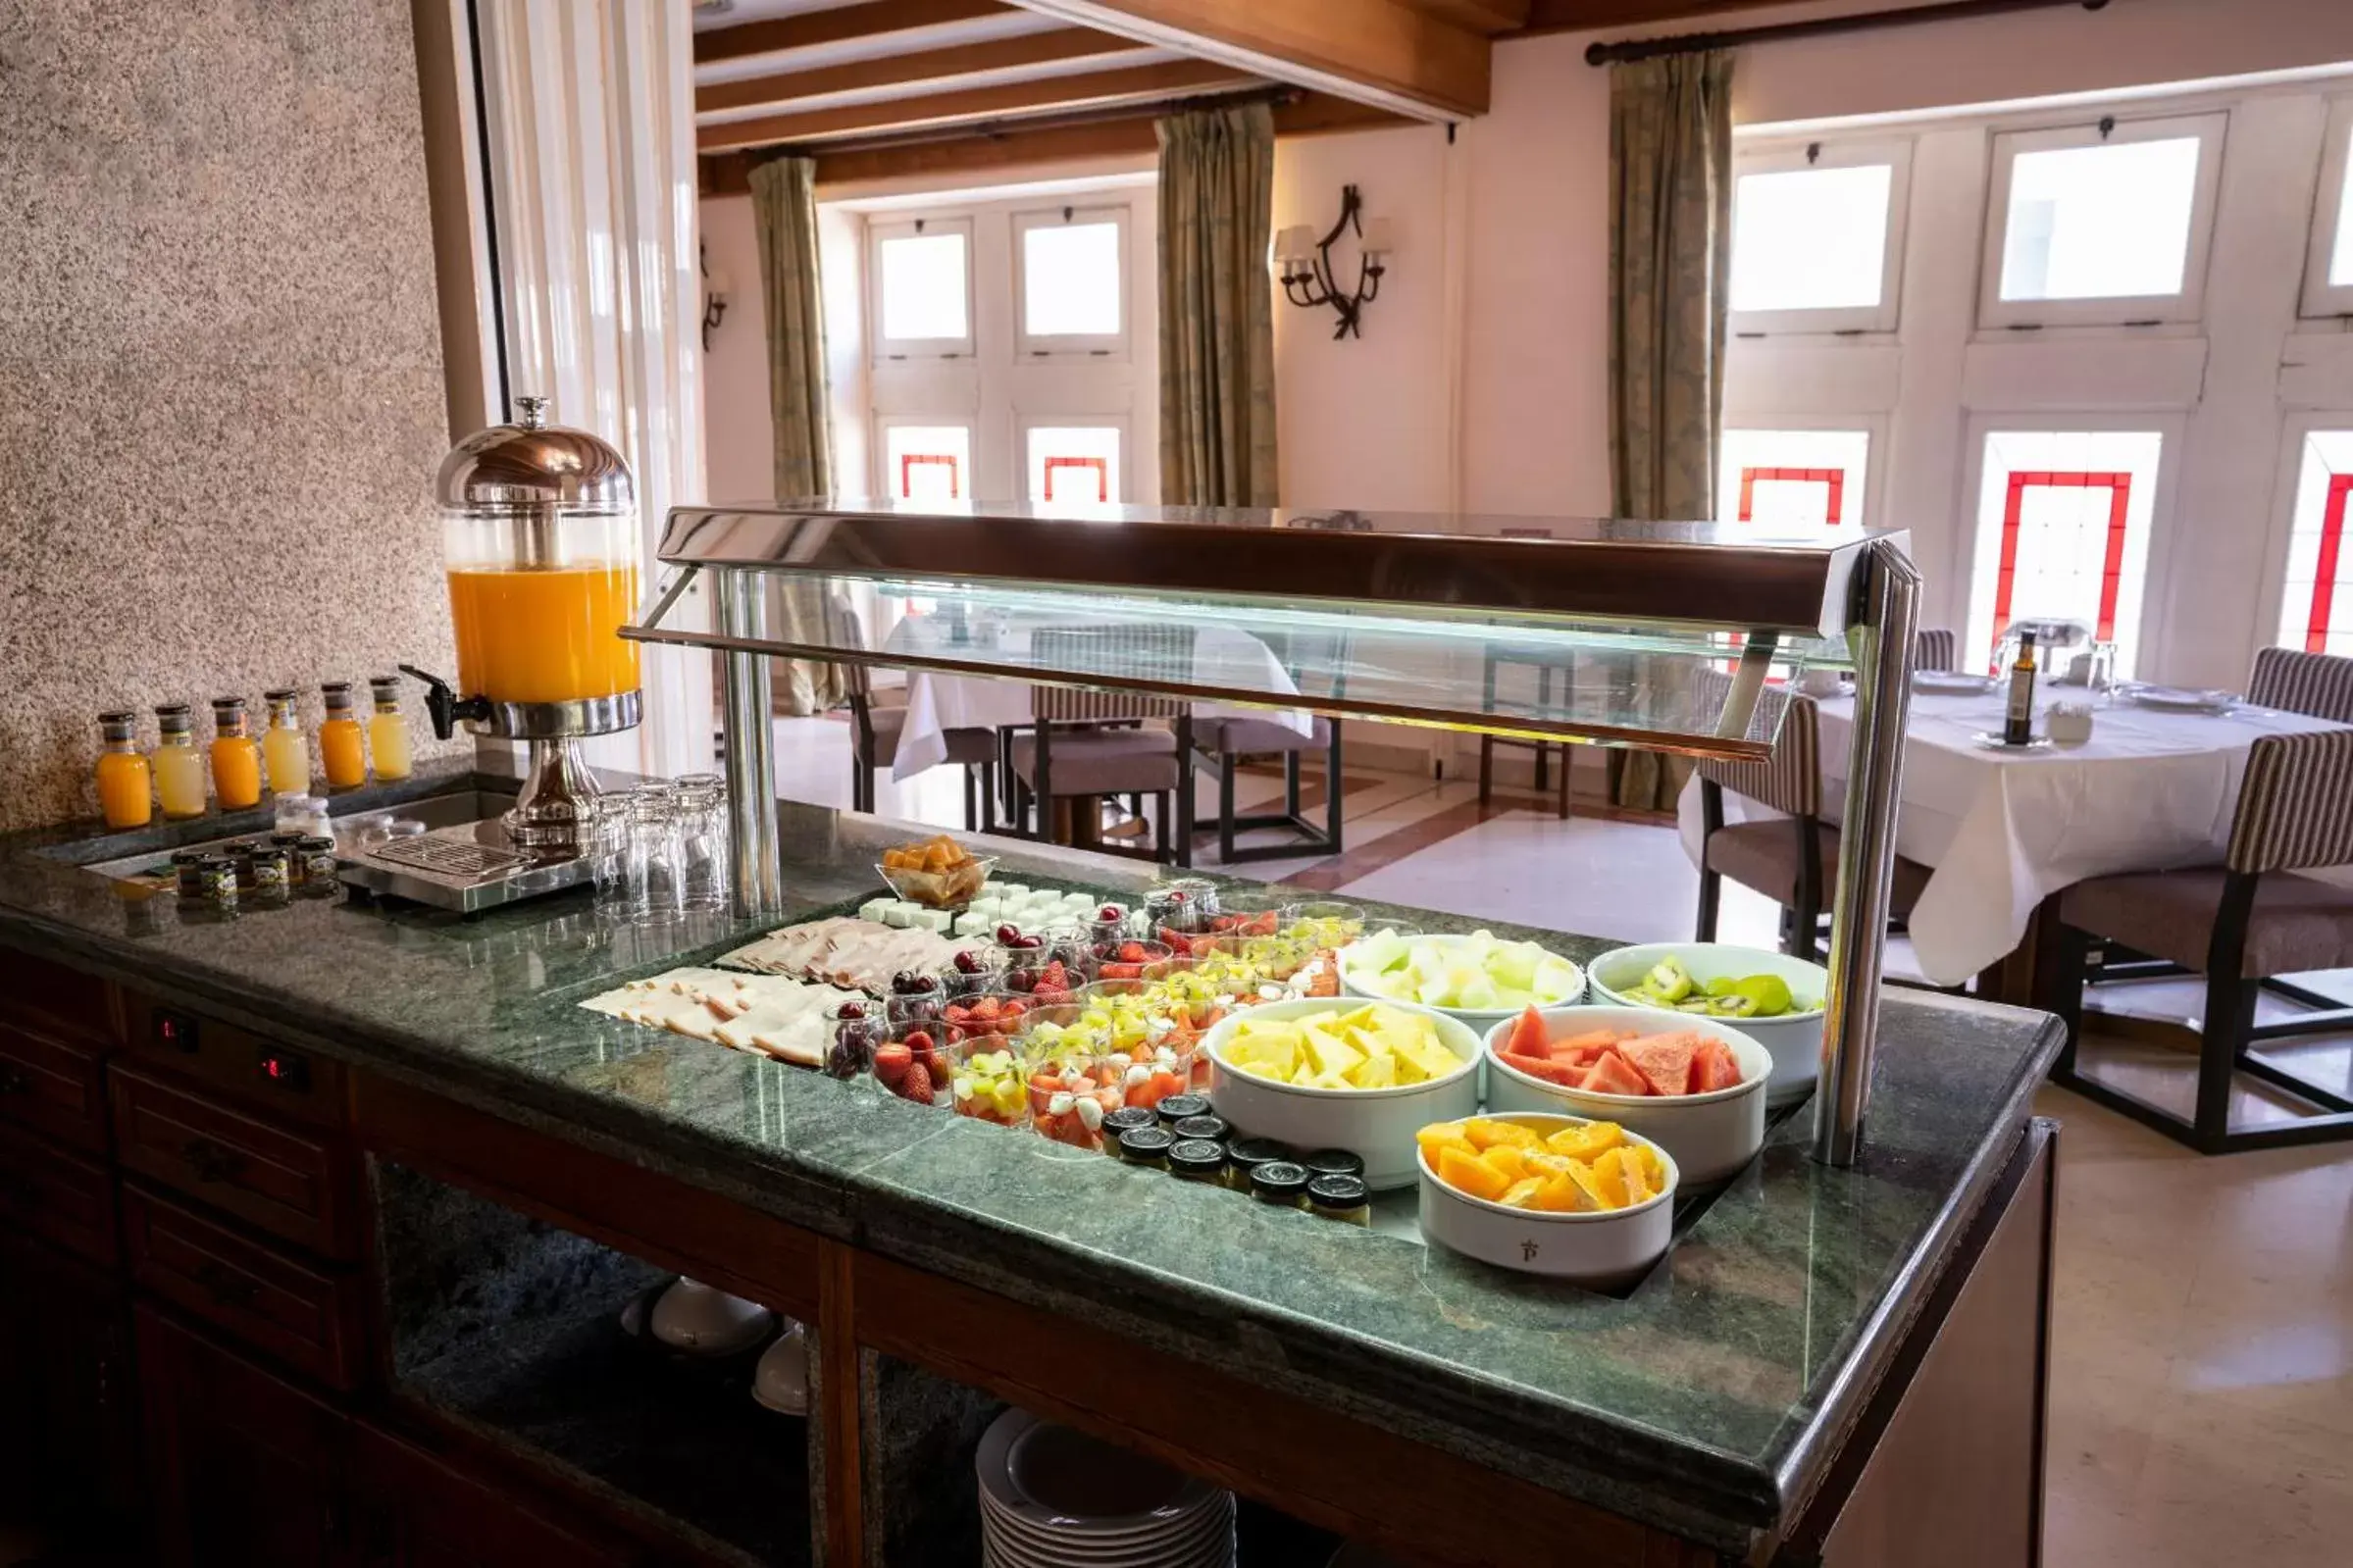 Buffet breakfast in Parador de Vilalba